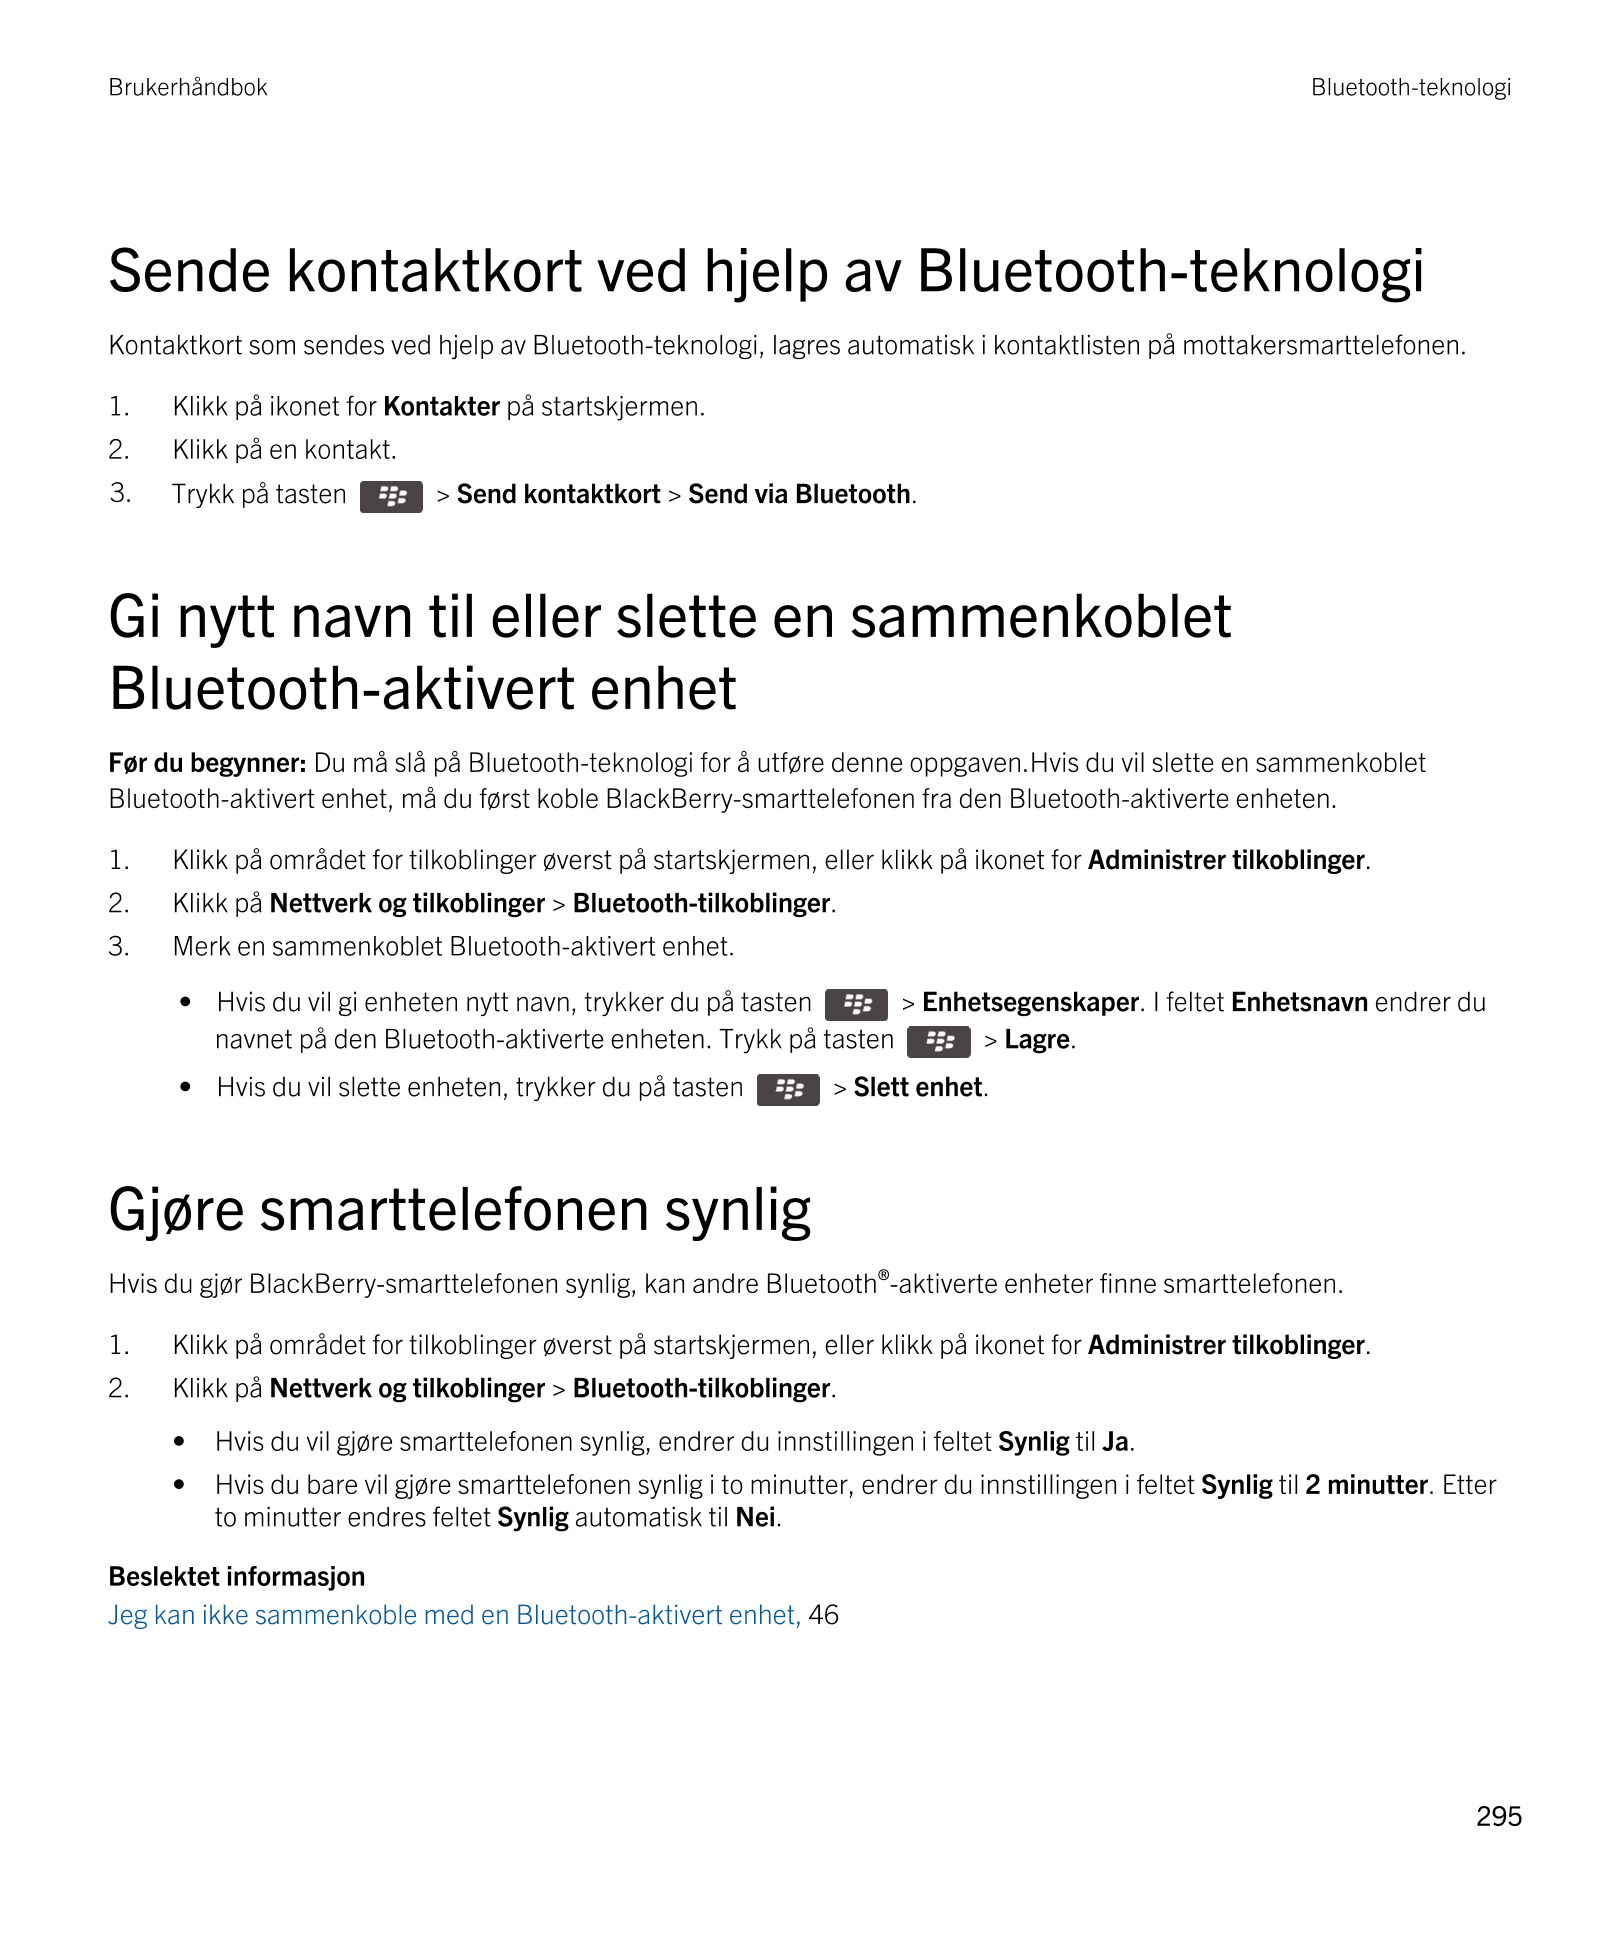 Brukerhåndbok Bluetooth-teknologi
Sende kontaktkort ved hjelp av  Bluetooth-teknologi
Kontaktkort som sendes ved hjelp av  Bluet